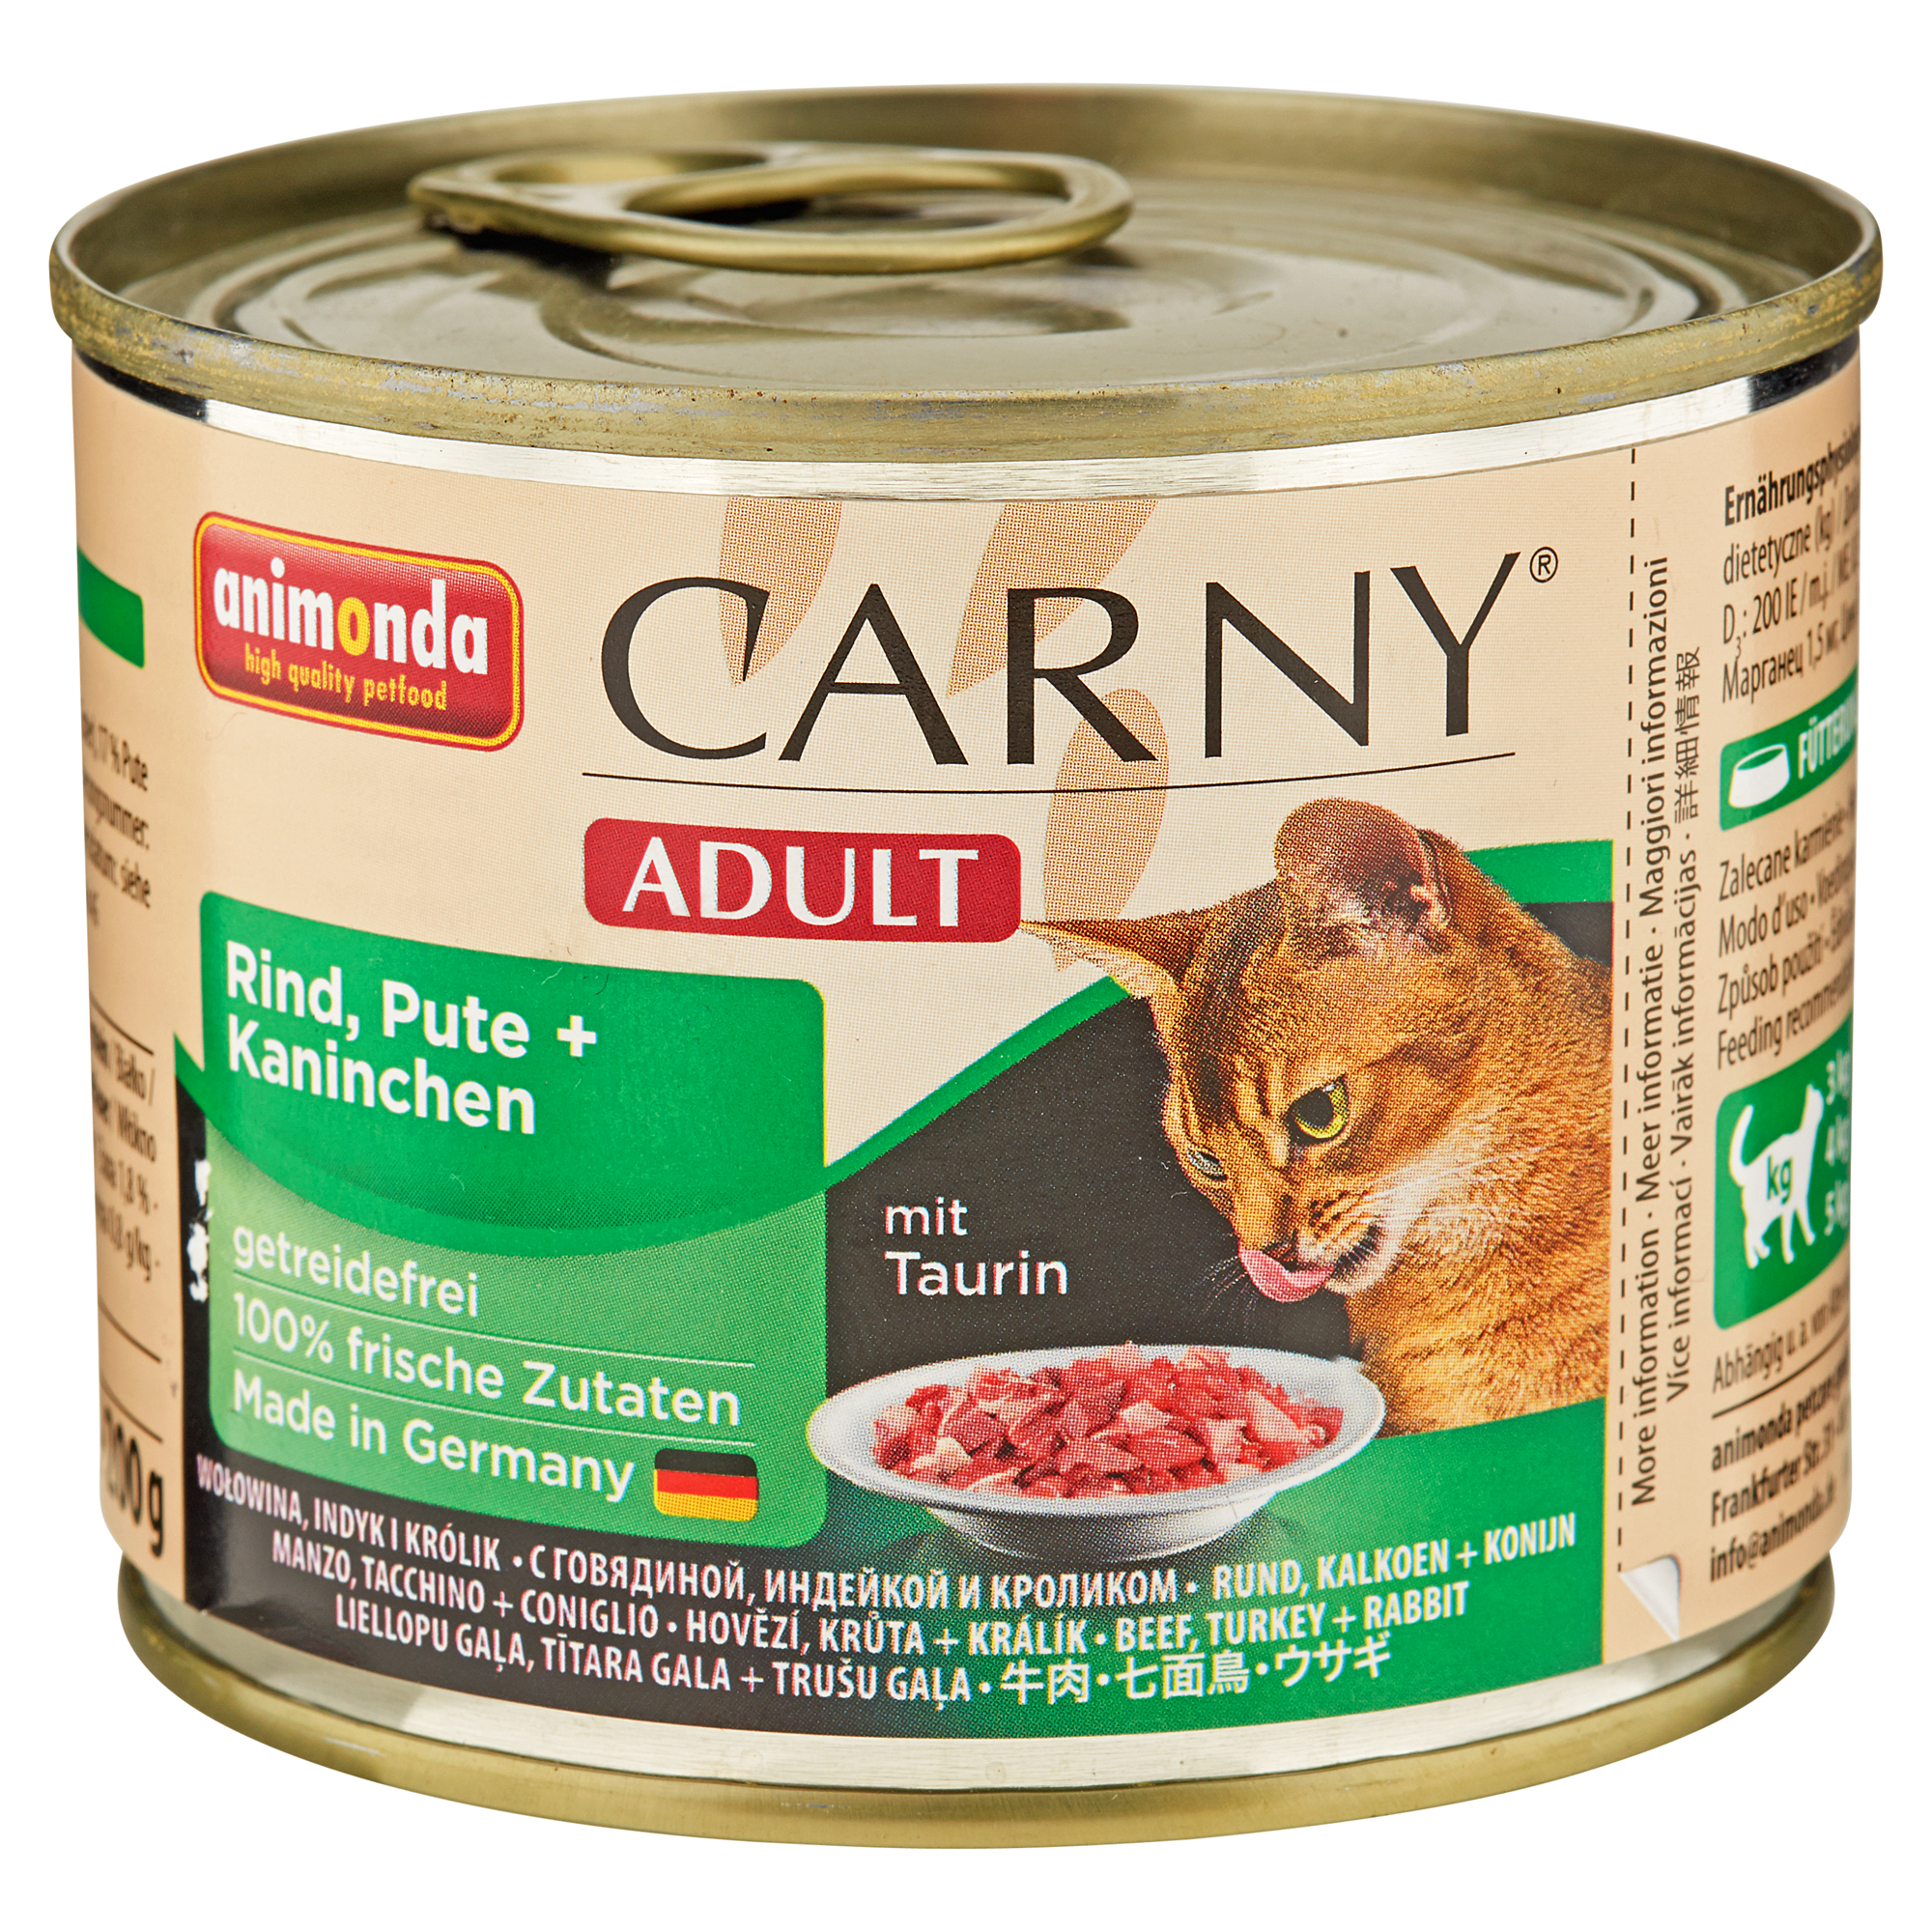 Katzennassfutter "Carny" Adult mit Rind/Pute/Kaninchen 200 g + product picture